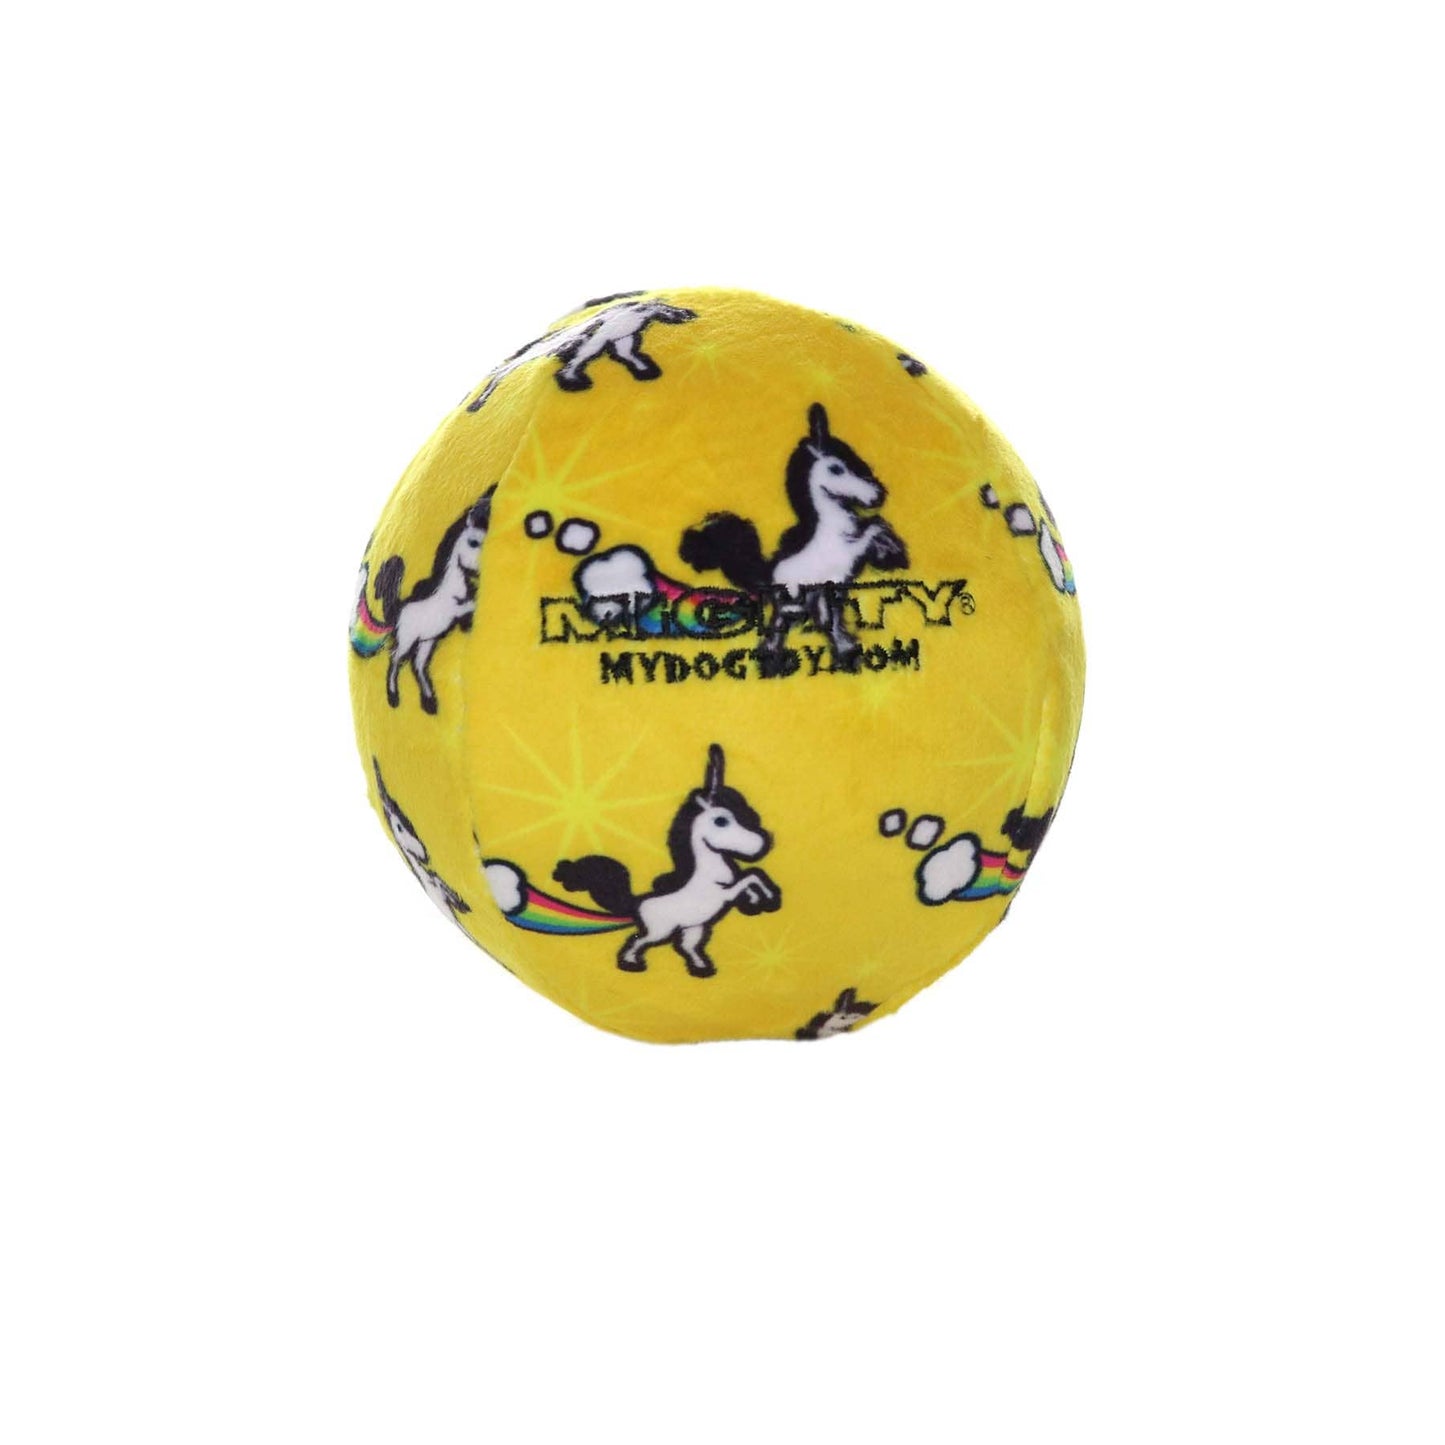 Mighty Ball - Medium Unicorn, Squeaky Dog Toy